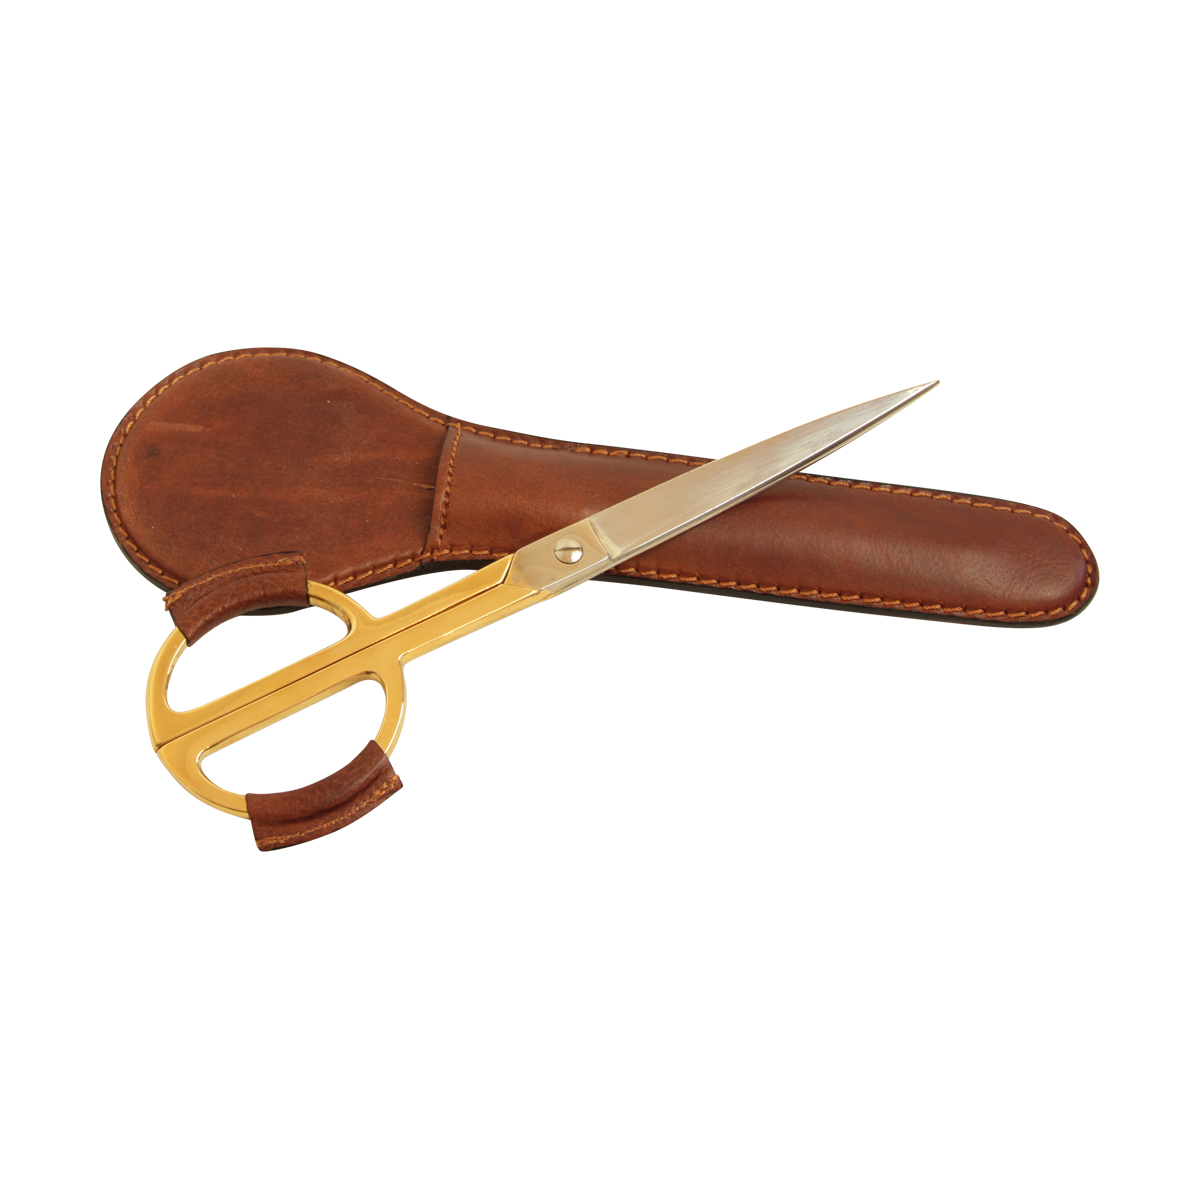 Leather scissors holder | 753605MA US | Old Angler Firenze